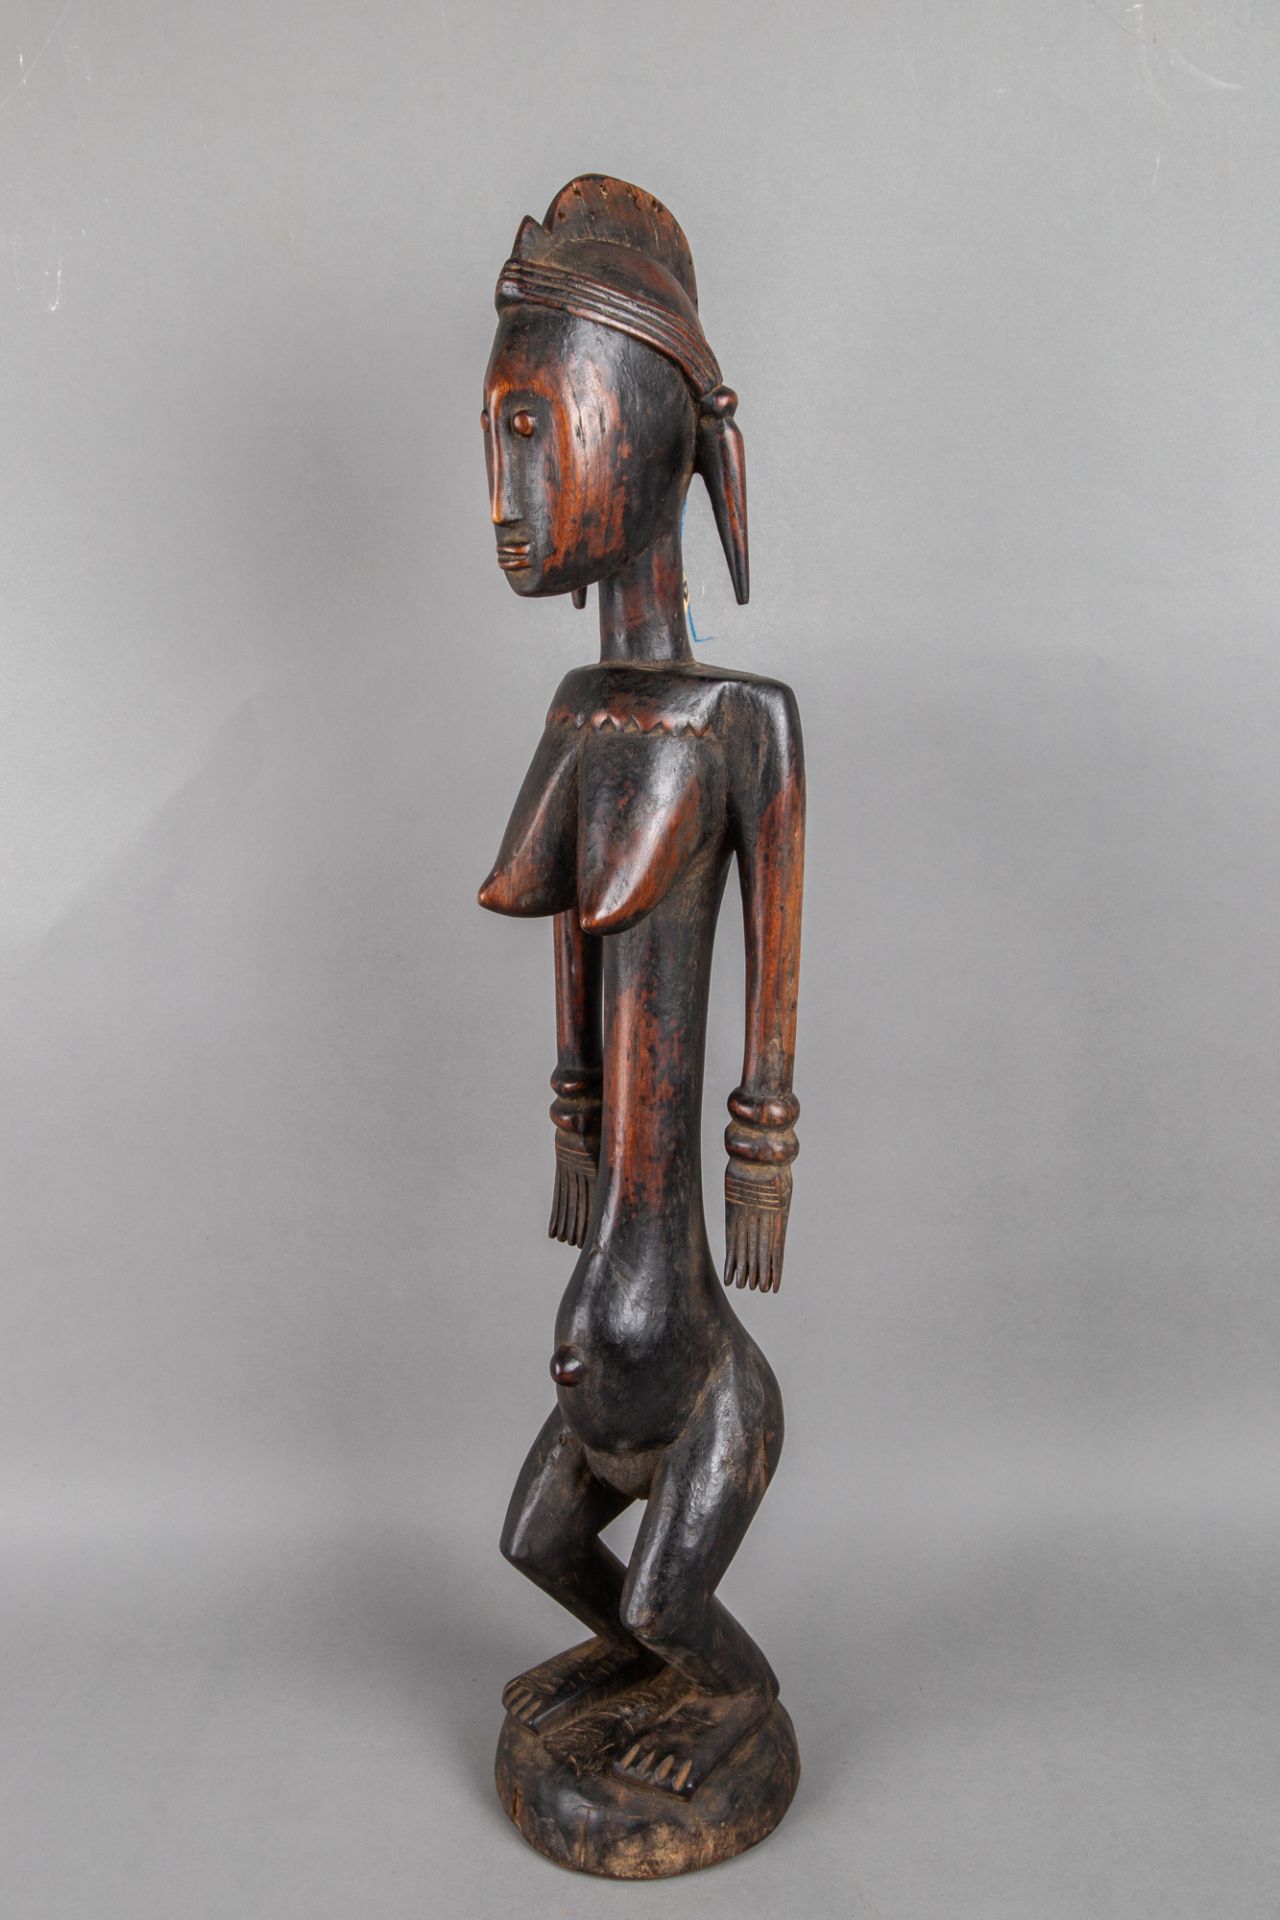 Stehende weibliche Figur 'jo nyeleni', Holz, Bamana, Mali - Bild 3 aus 4